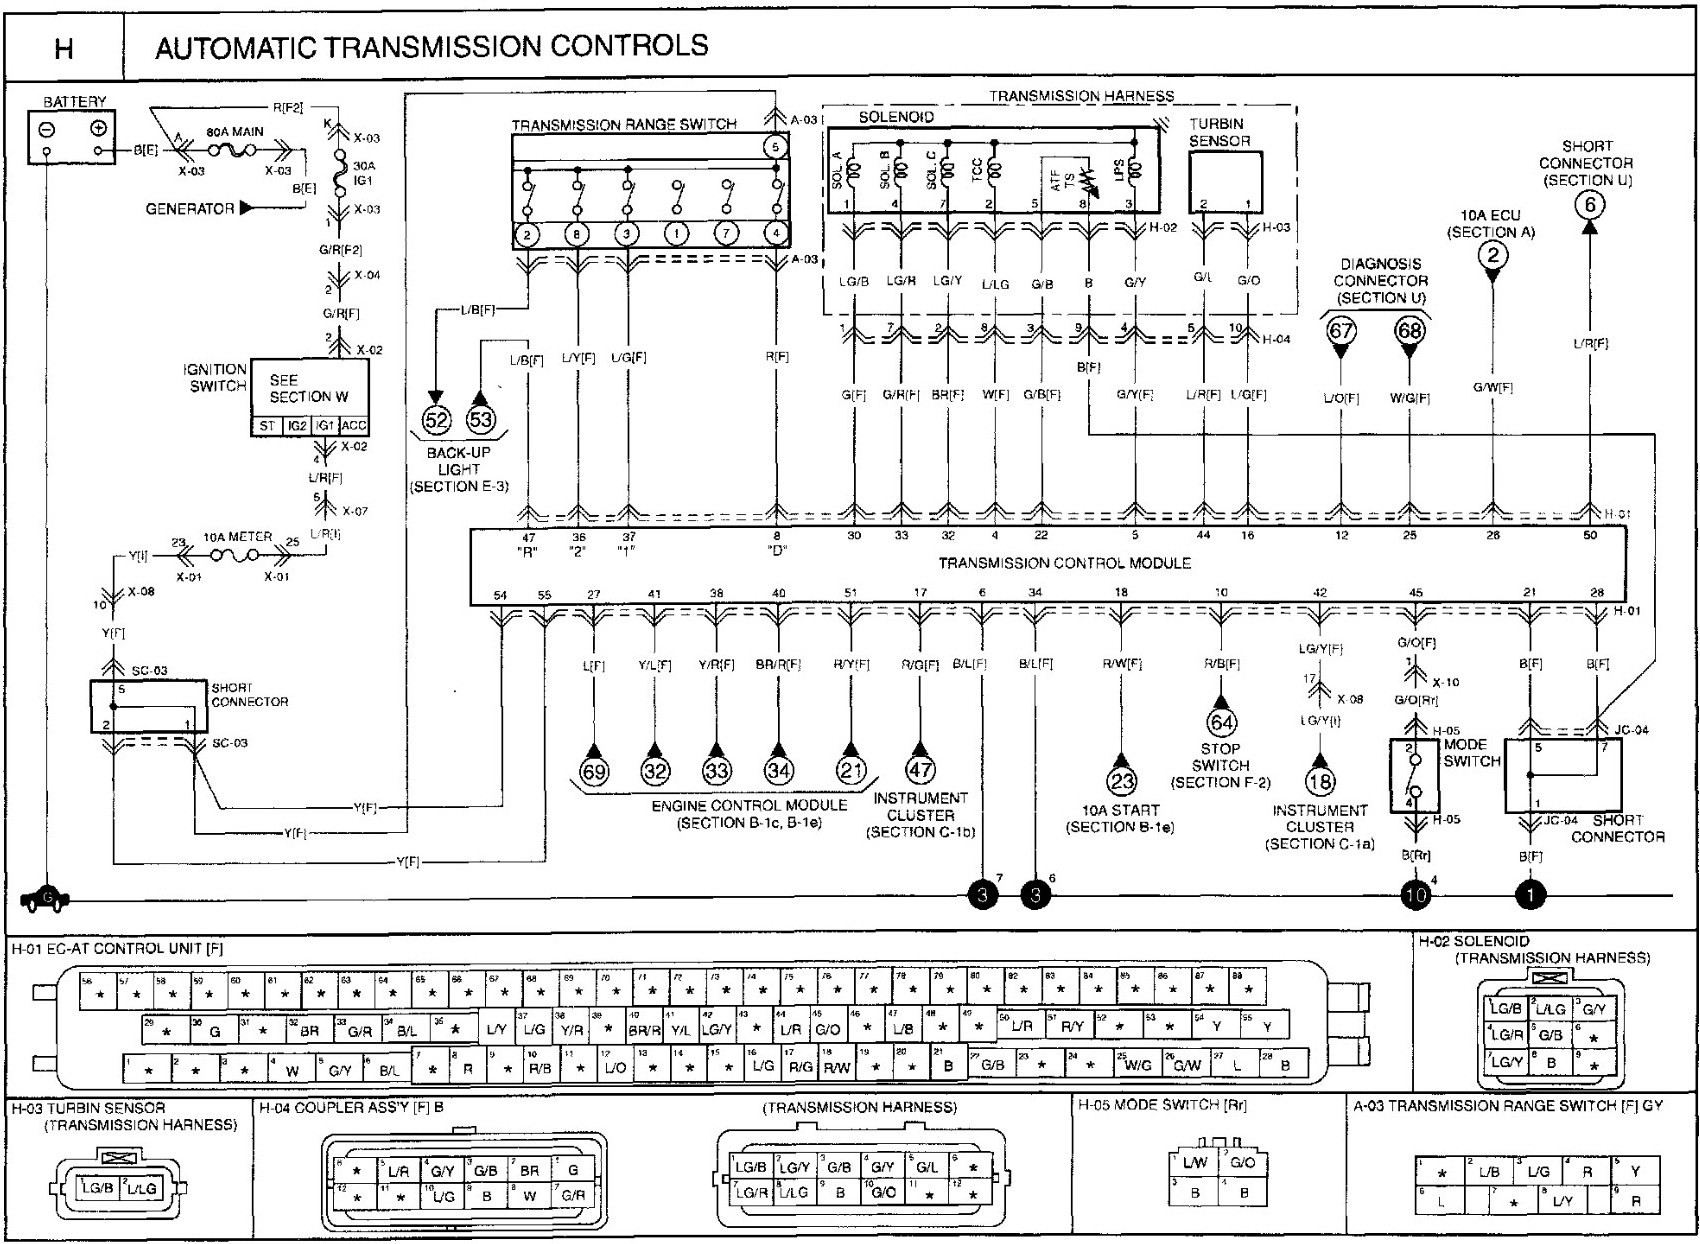 2004 Kia sorento Parts Diagram 2003 Kia Spectra Parts Diagram Wiring Schematic Wiring